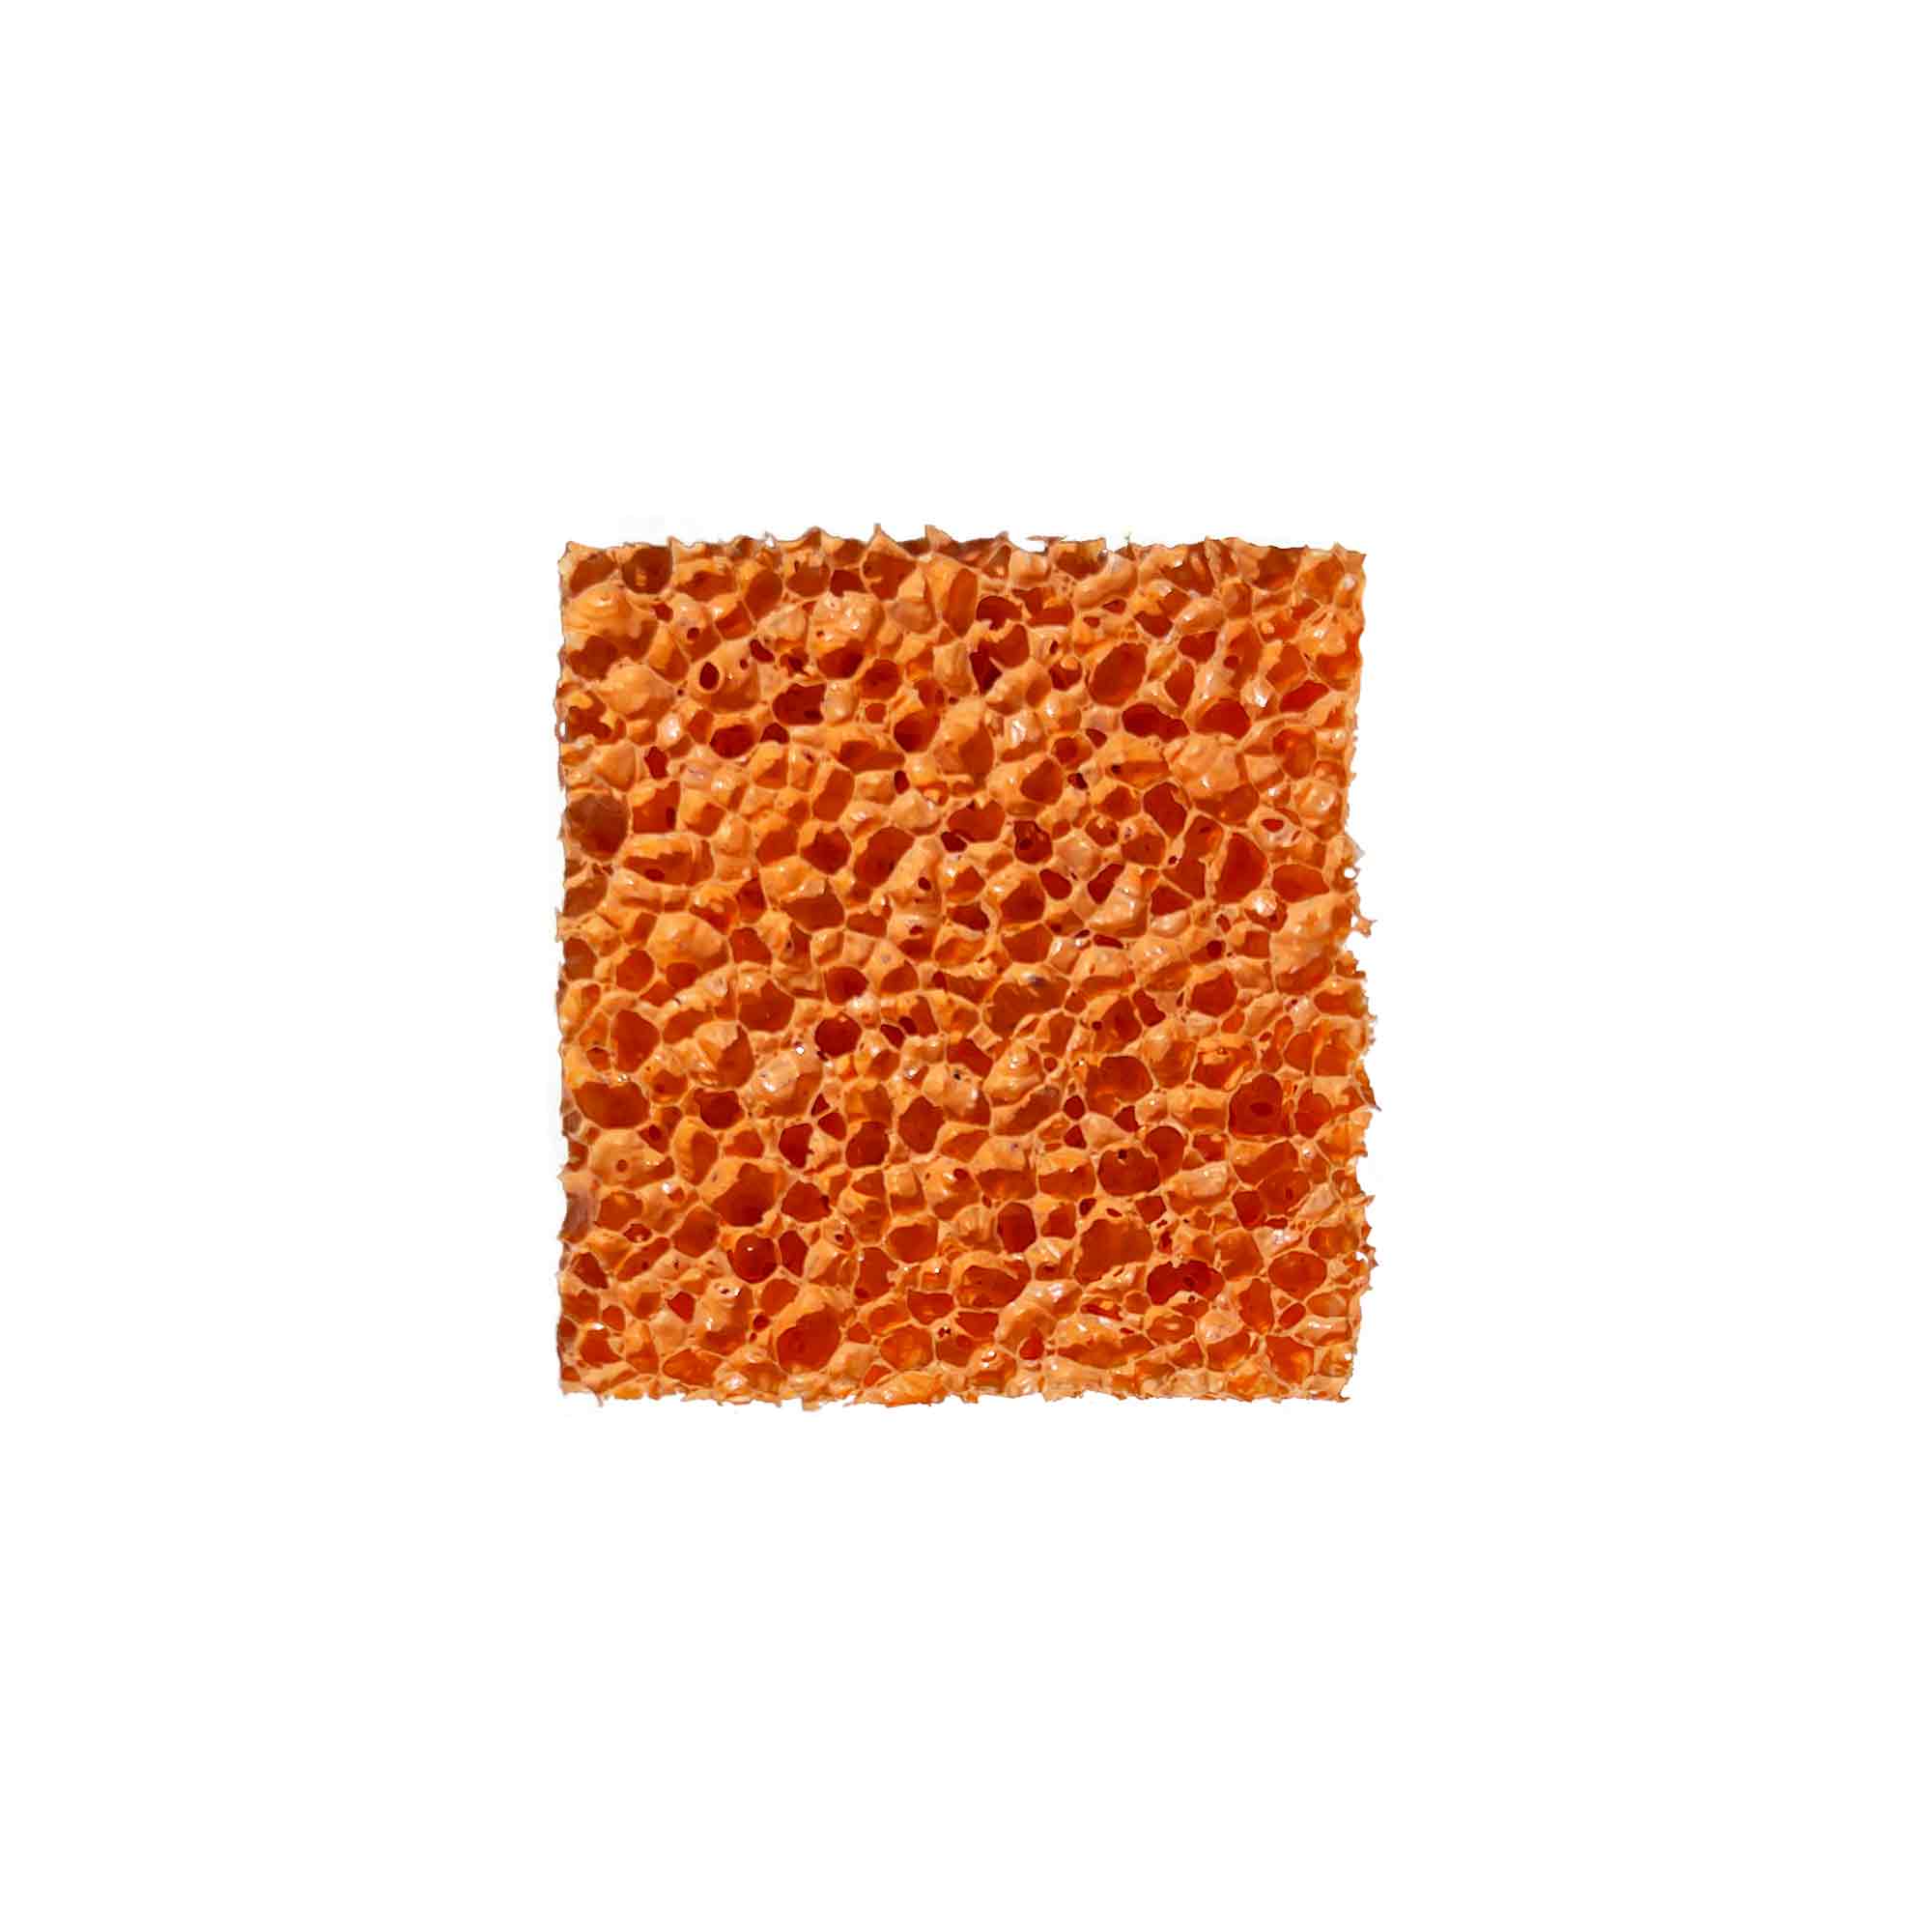 Small Pore Stipple Sponge — Black Lagoon Supply Co.